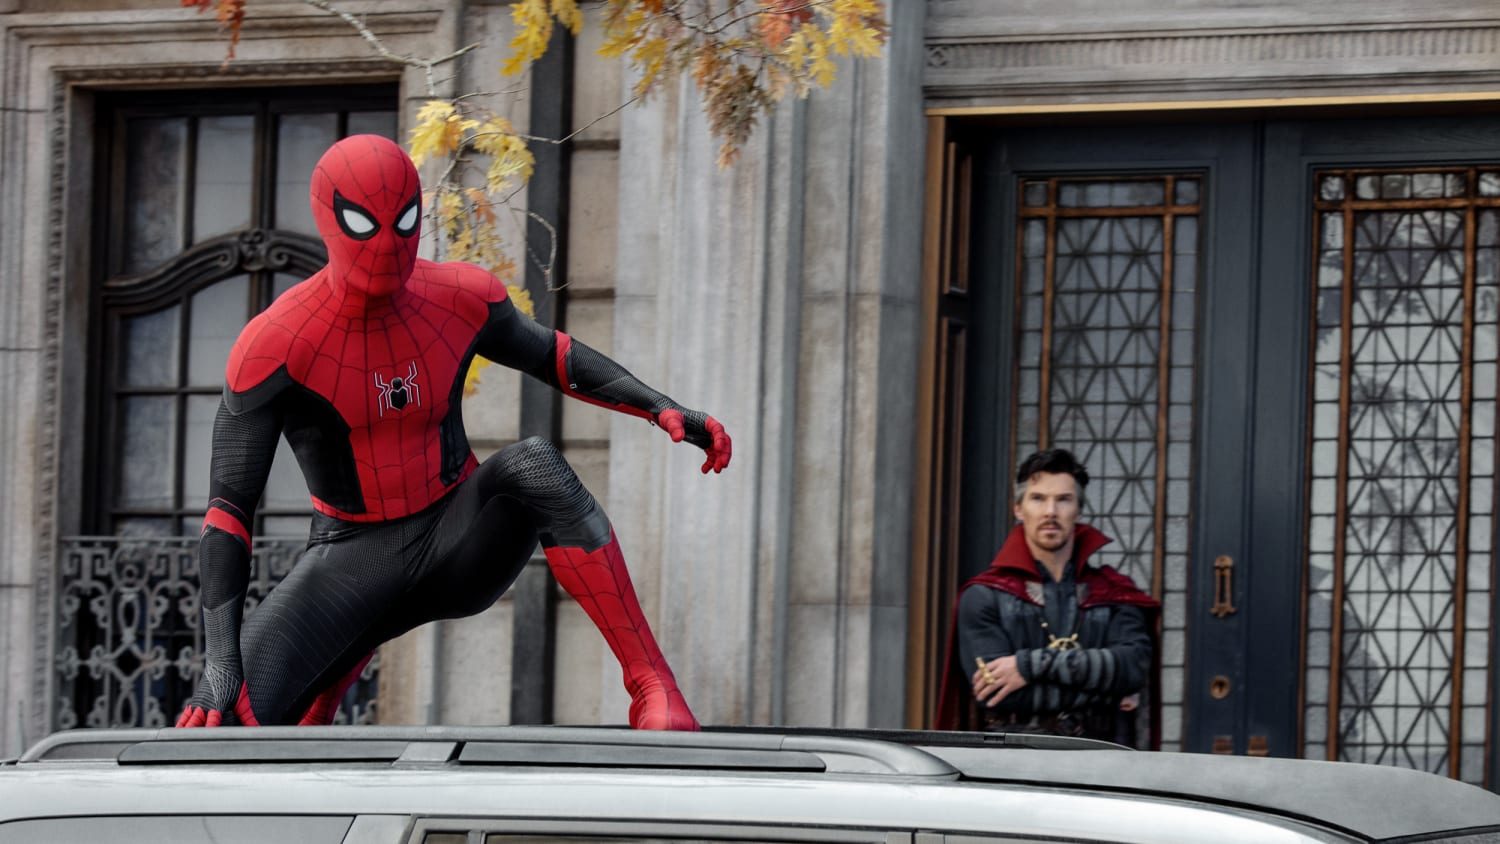 ‘Spider-Man: No Way Home’ crosses $1 billion mark at worldwide box office